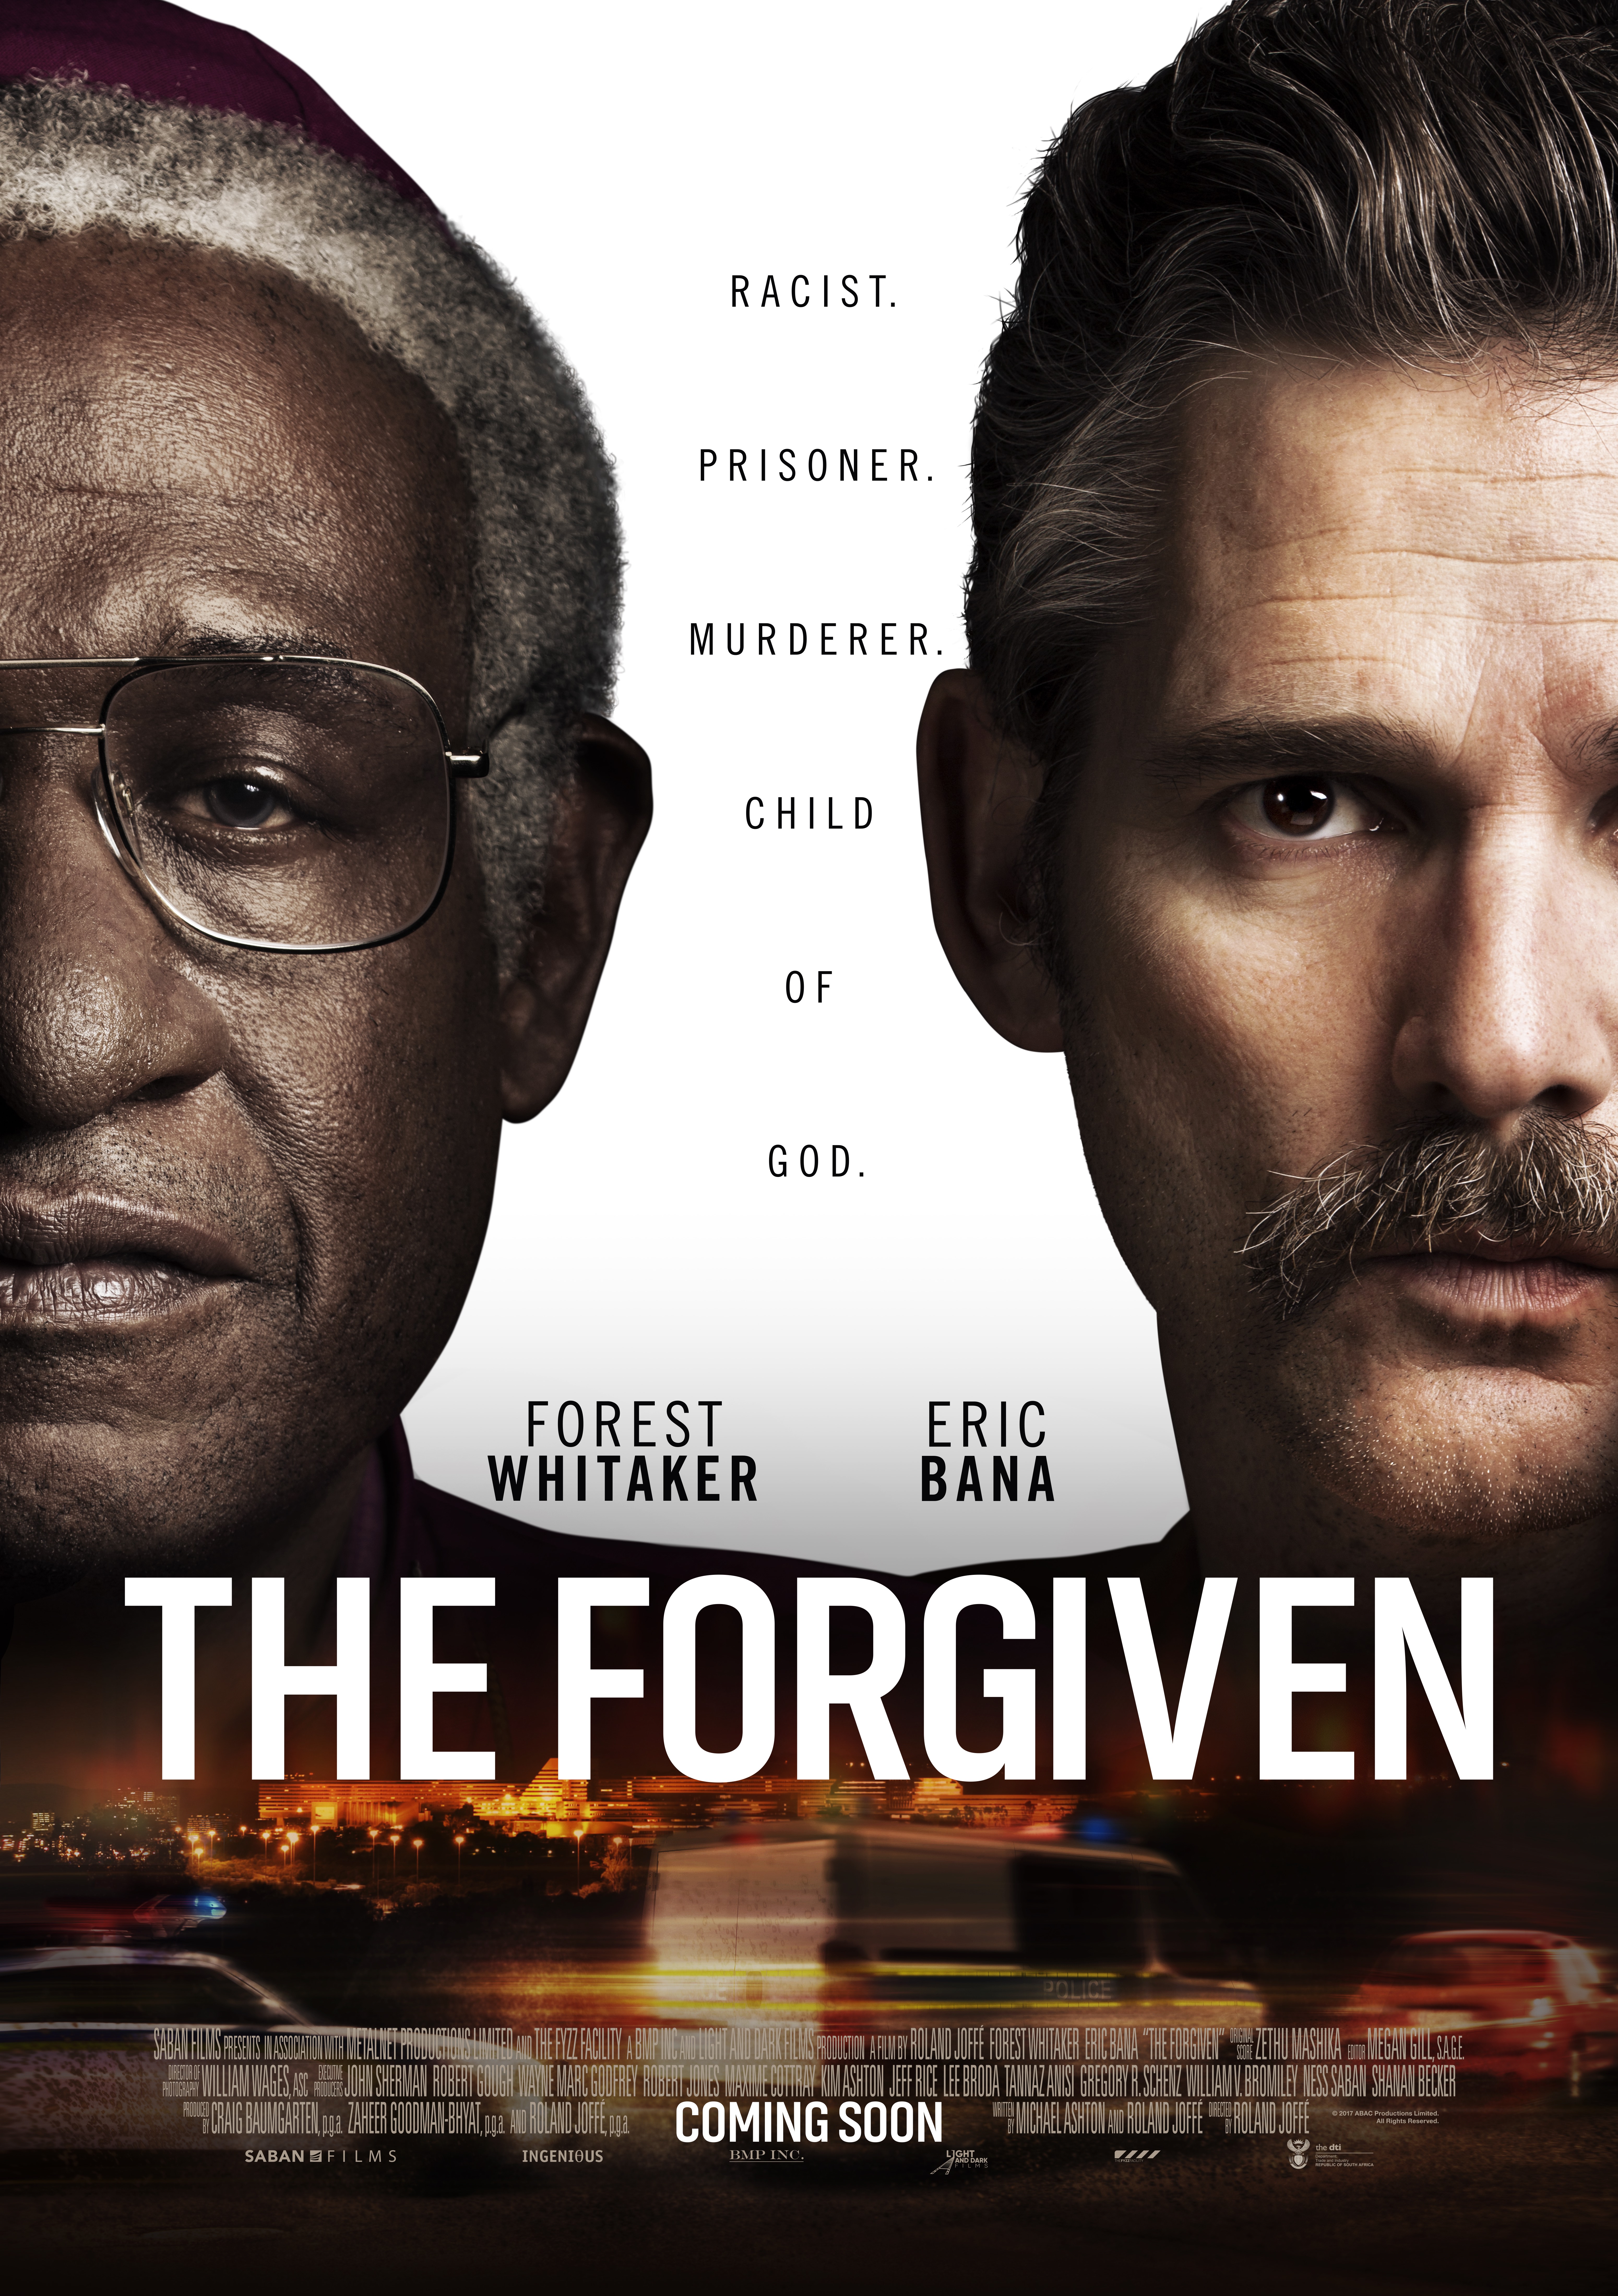 Nonton film The Forgiven layarkaca21 indoxx1 ganool online streaming terbaru